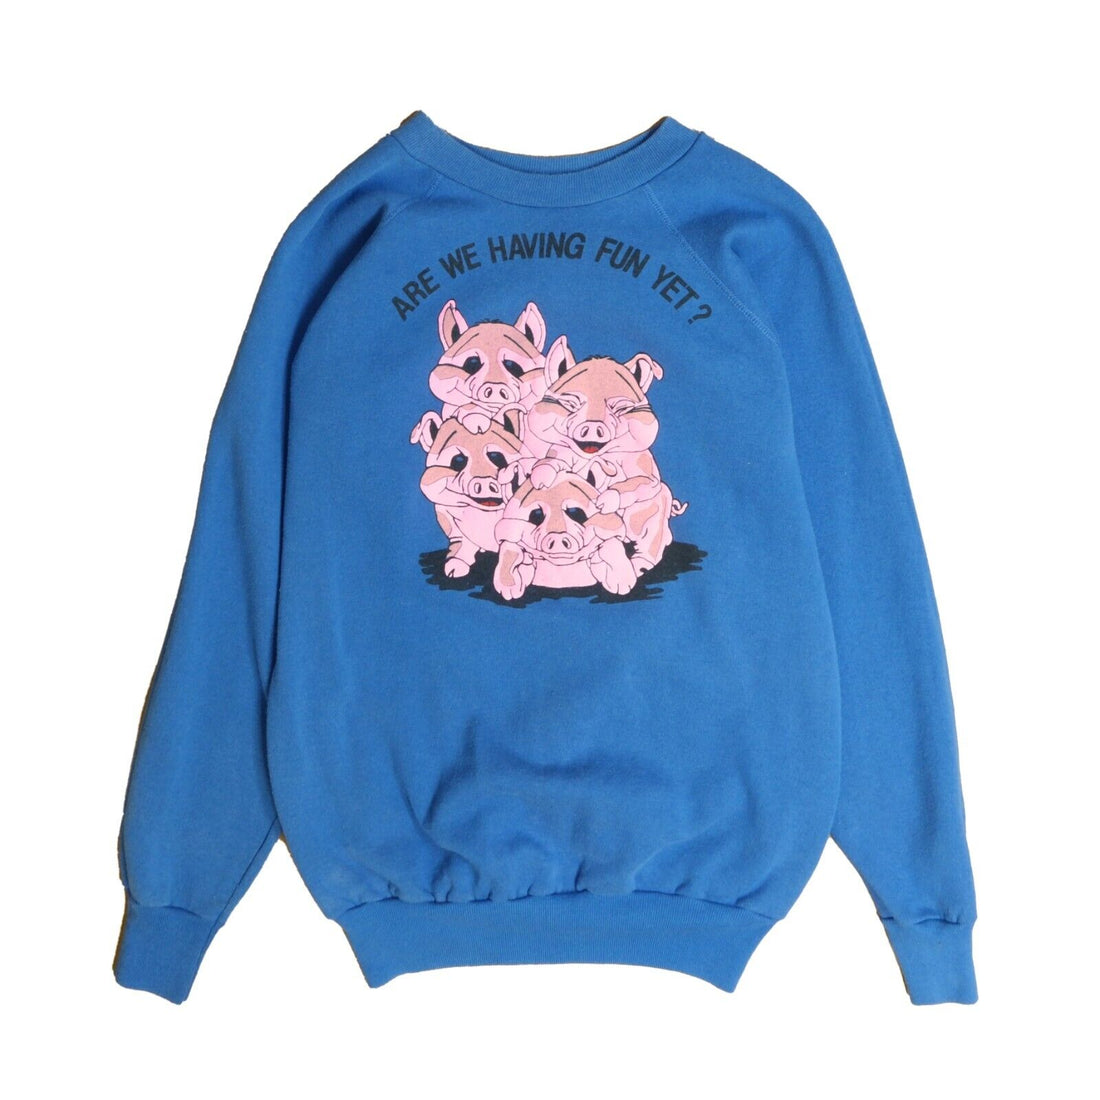 Vintage Are We Having Fun Yet Pigs Sweatshirt Size Large Blue Puff Print 80s 90s